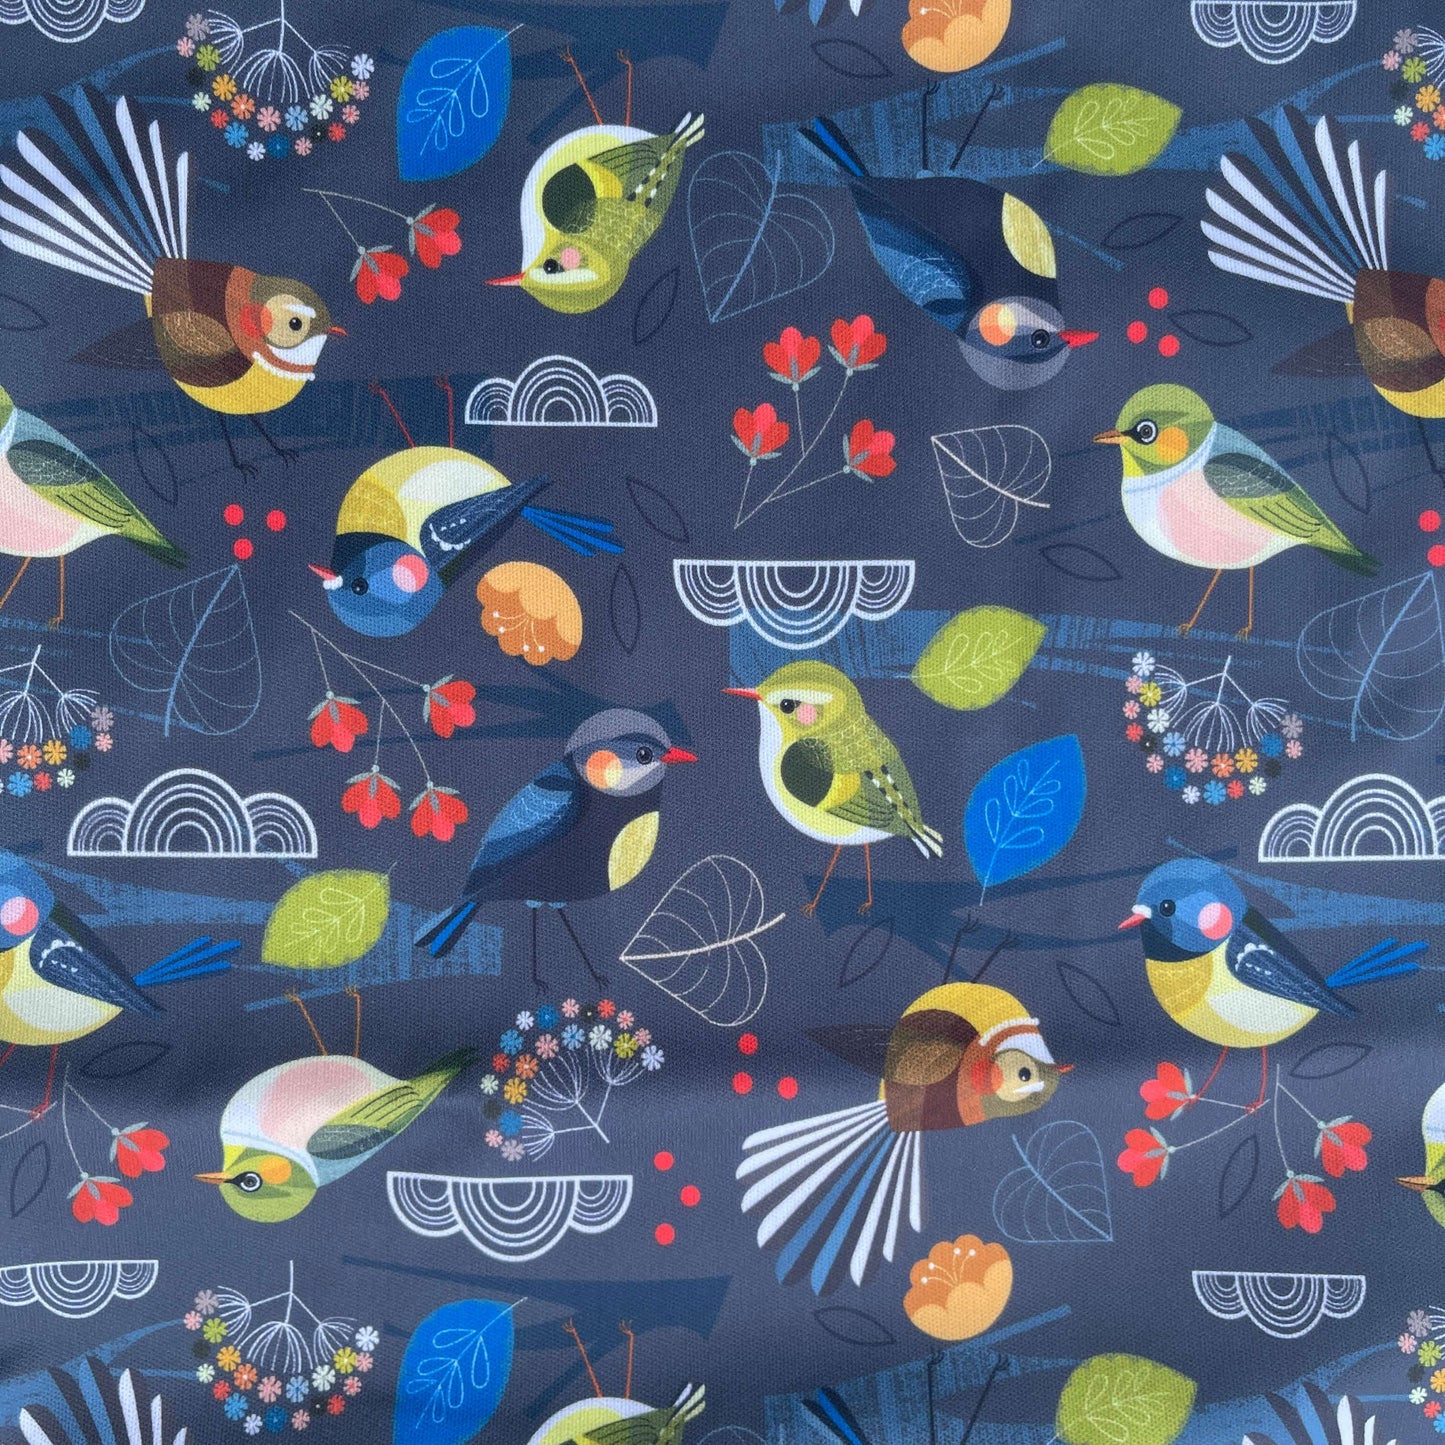 Fabric swatch with native New Zealand bird print.